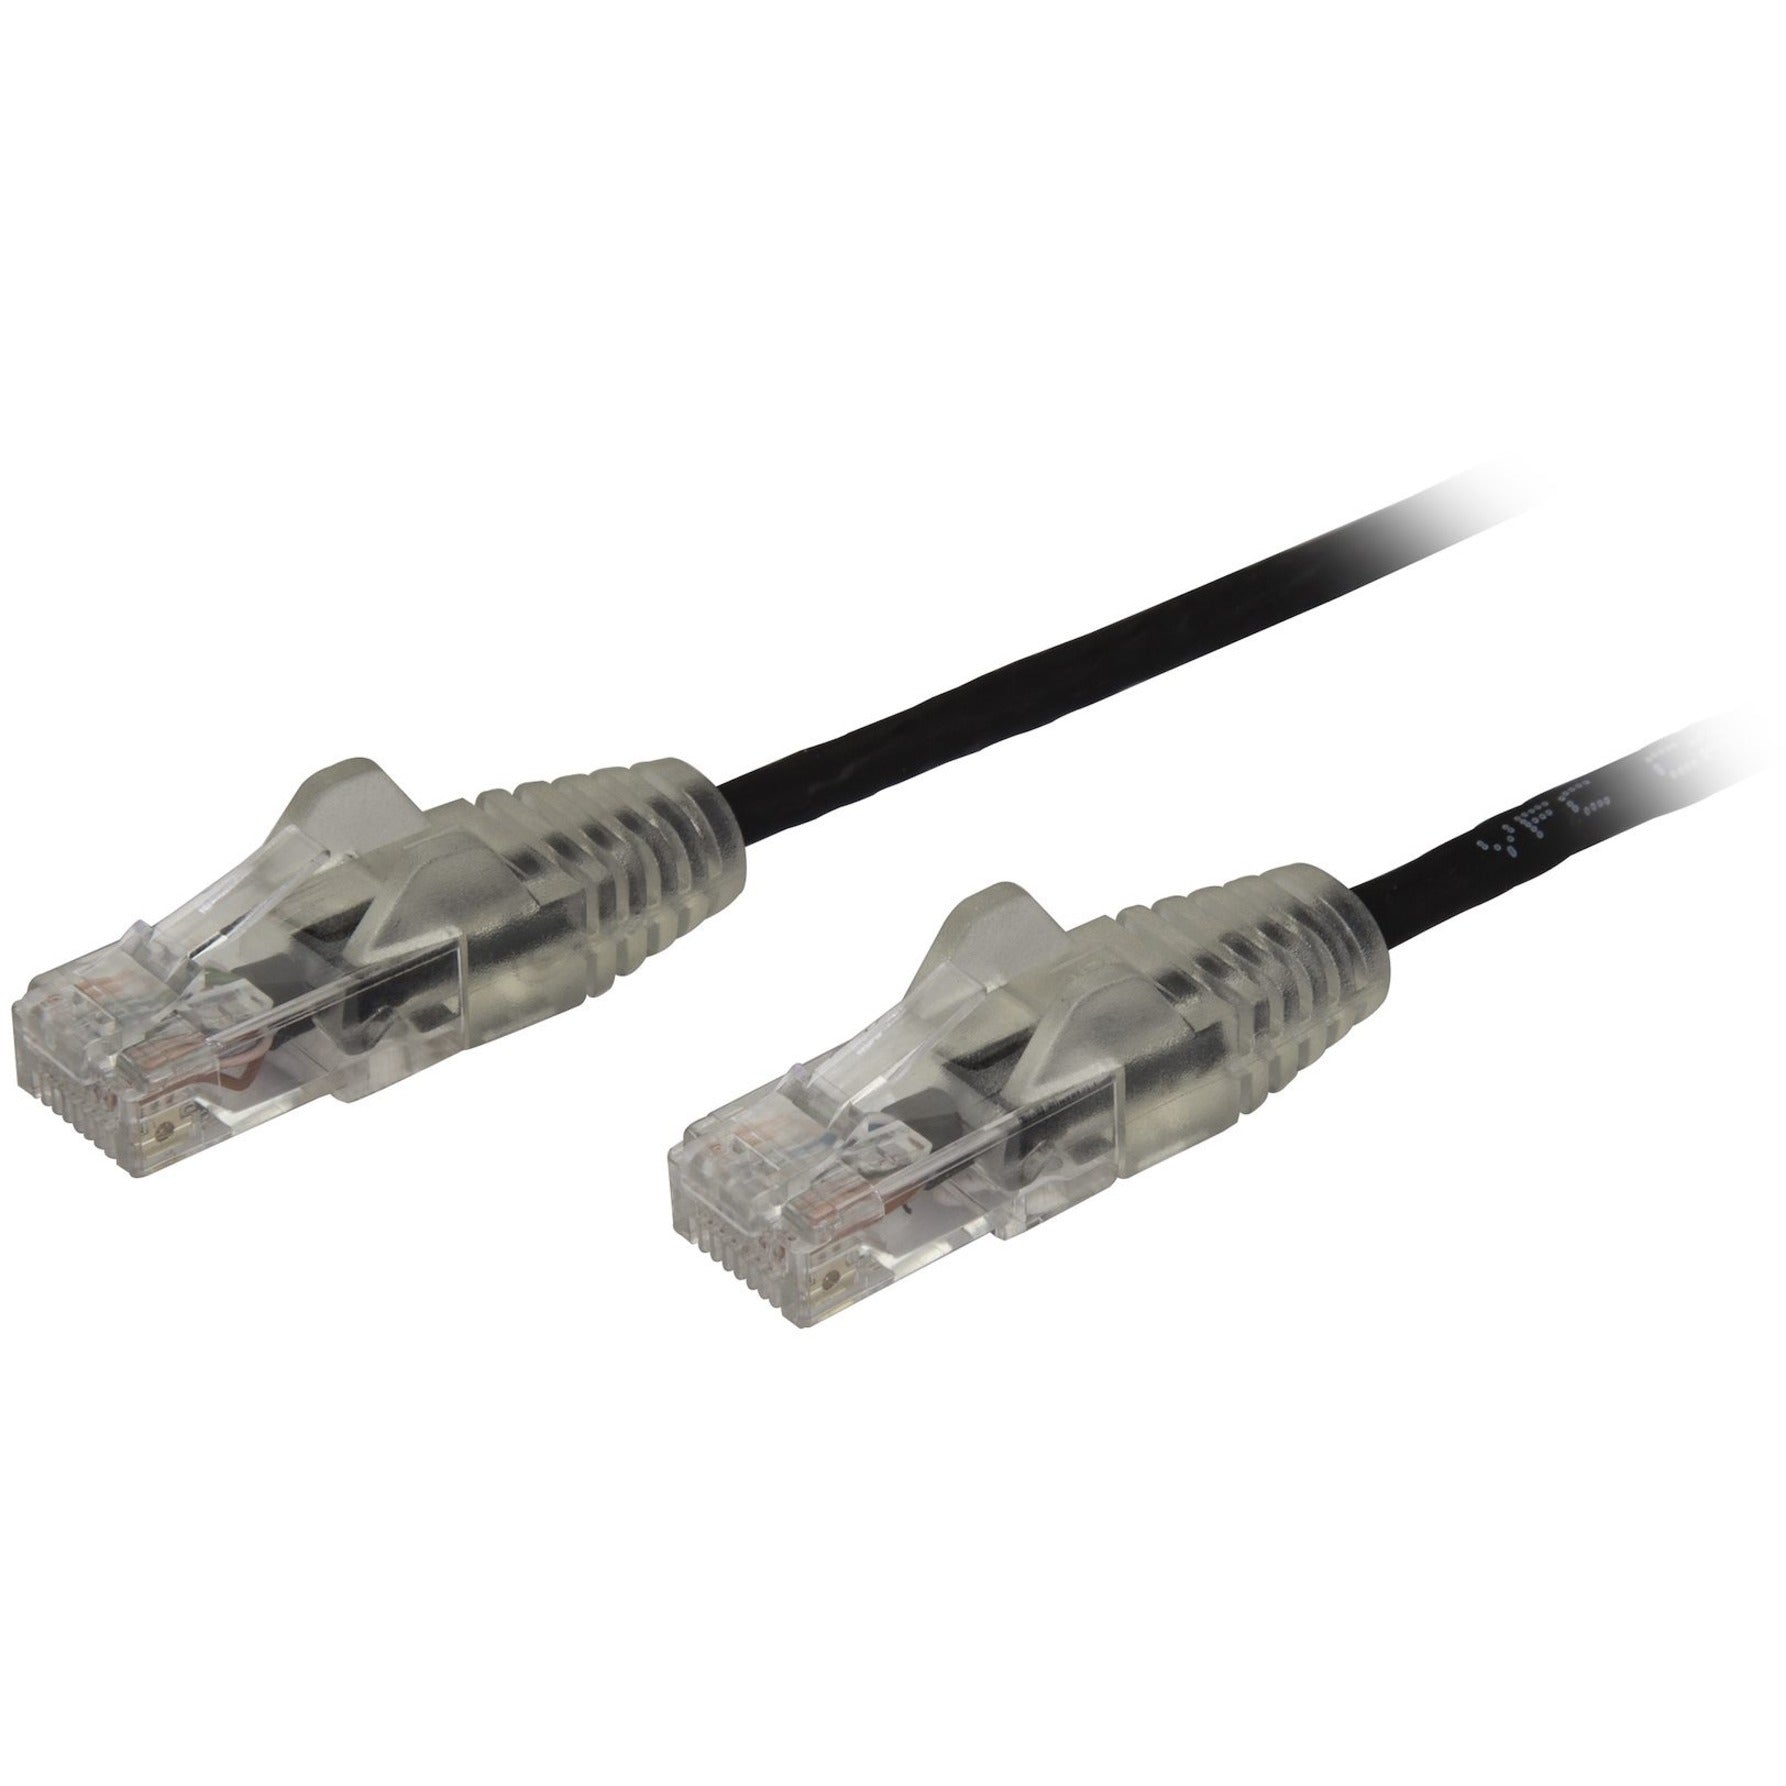 StarTech.com N6PAT6INBKS Cat.6 Patch Network Cable, 6 in Black - Slim, Snagless RJ45 Connectors, Cat6 Cable, Cat6 Patch Cable, Cat6 Network Cable